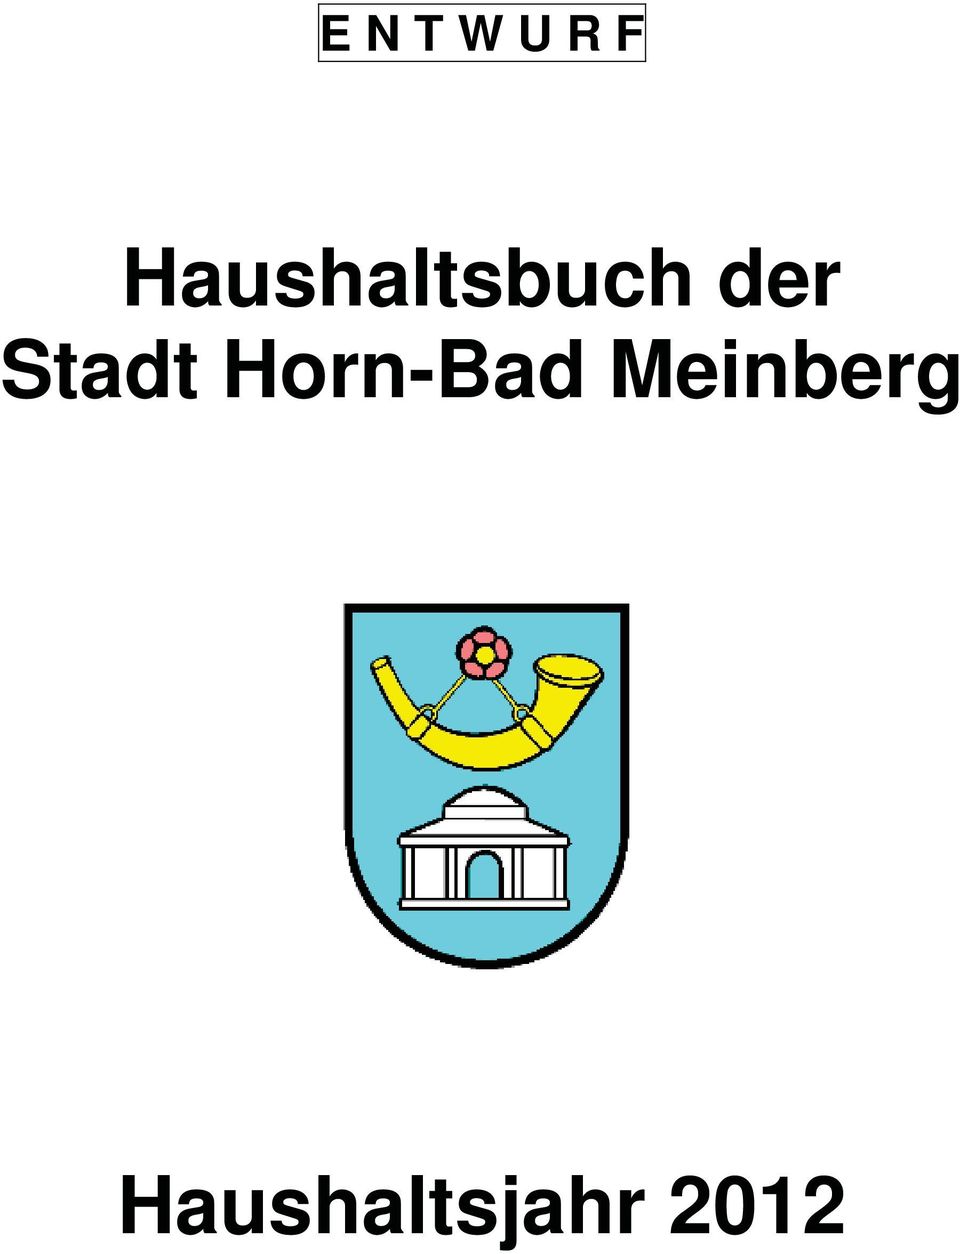 Stadt Horn-Bad